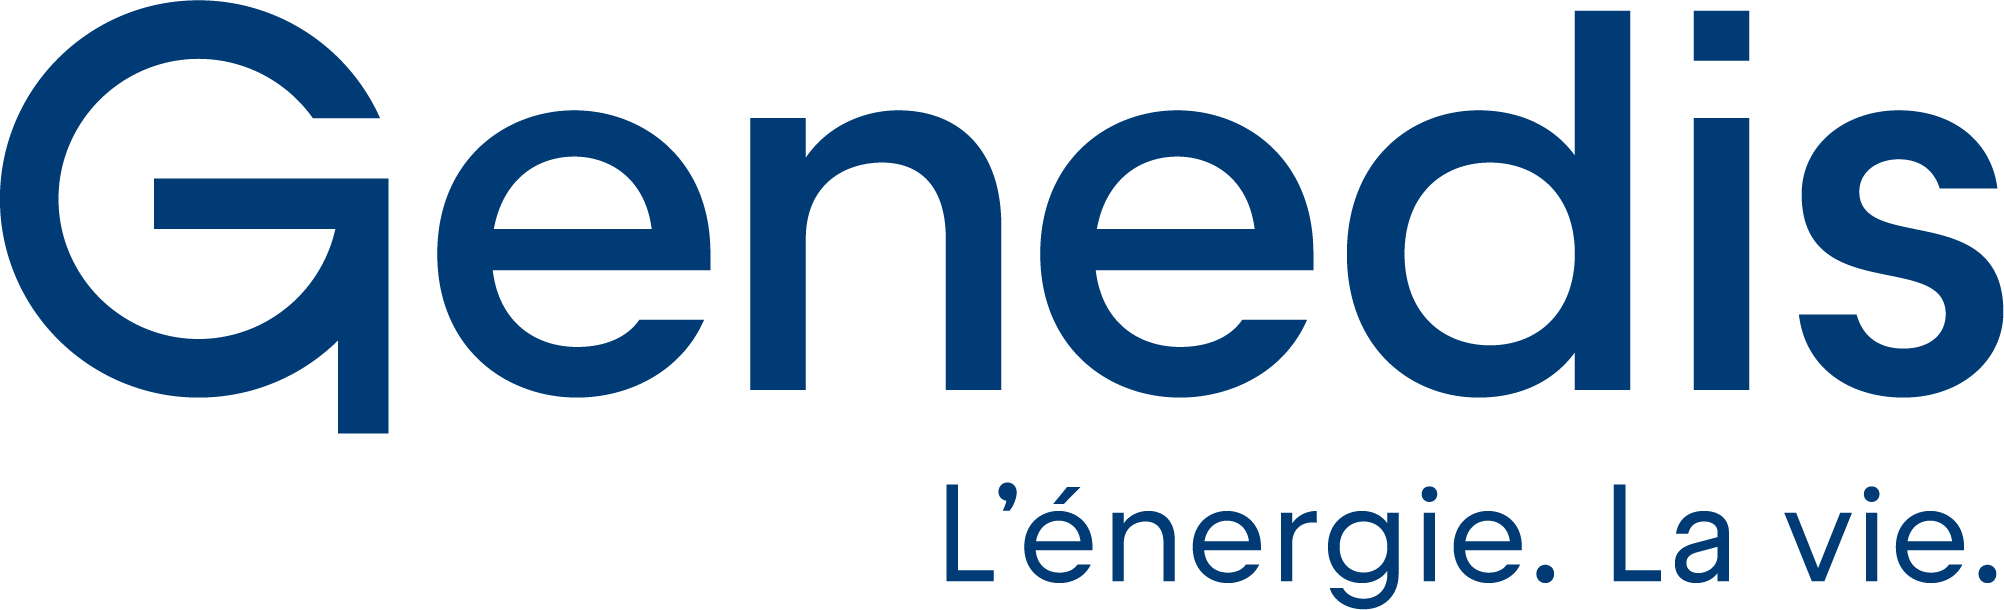 GENEDIS Logo Signature BLEU RVB WEB